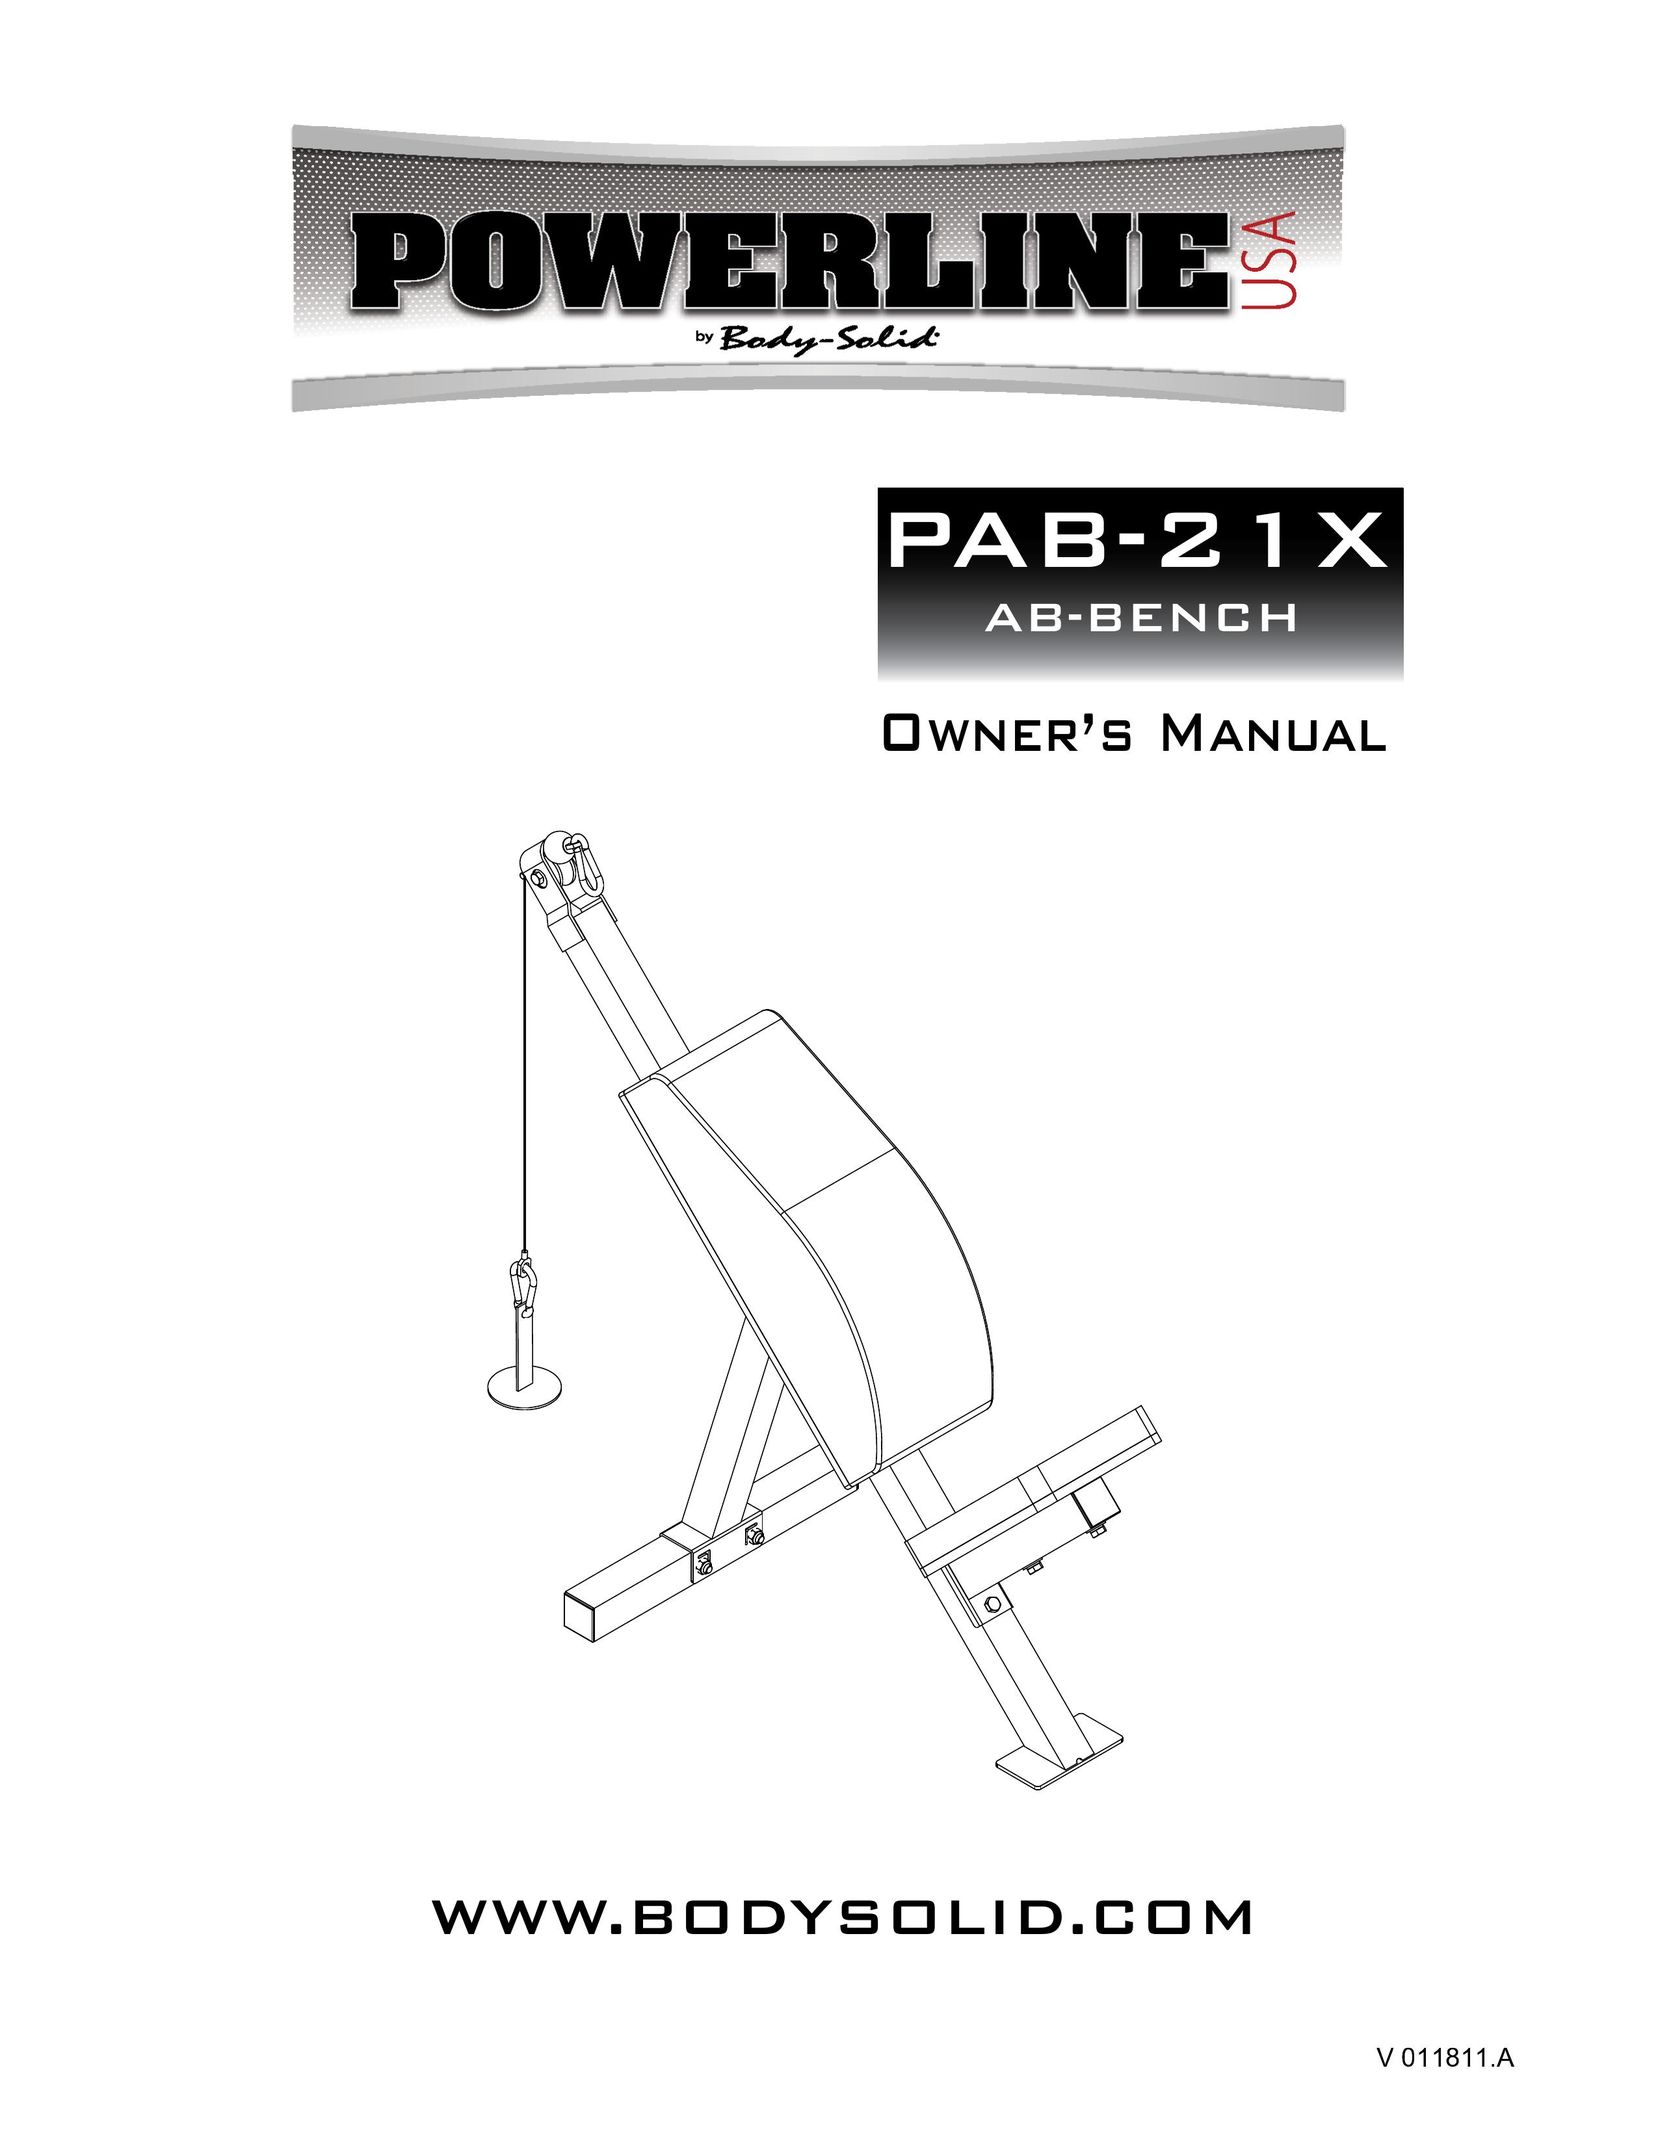 Powerline powerline ab-bench Baby Gym User Manual